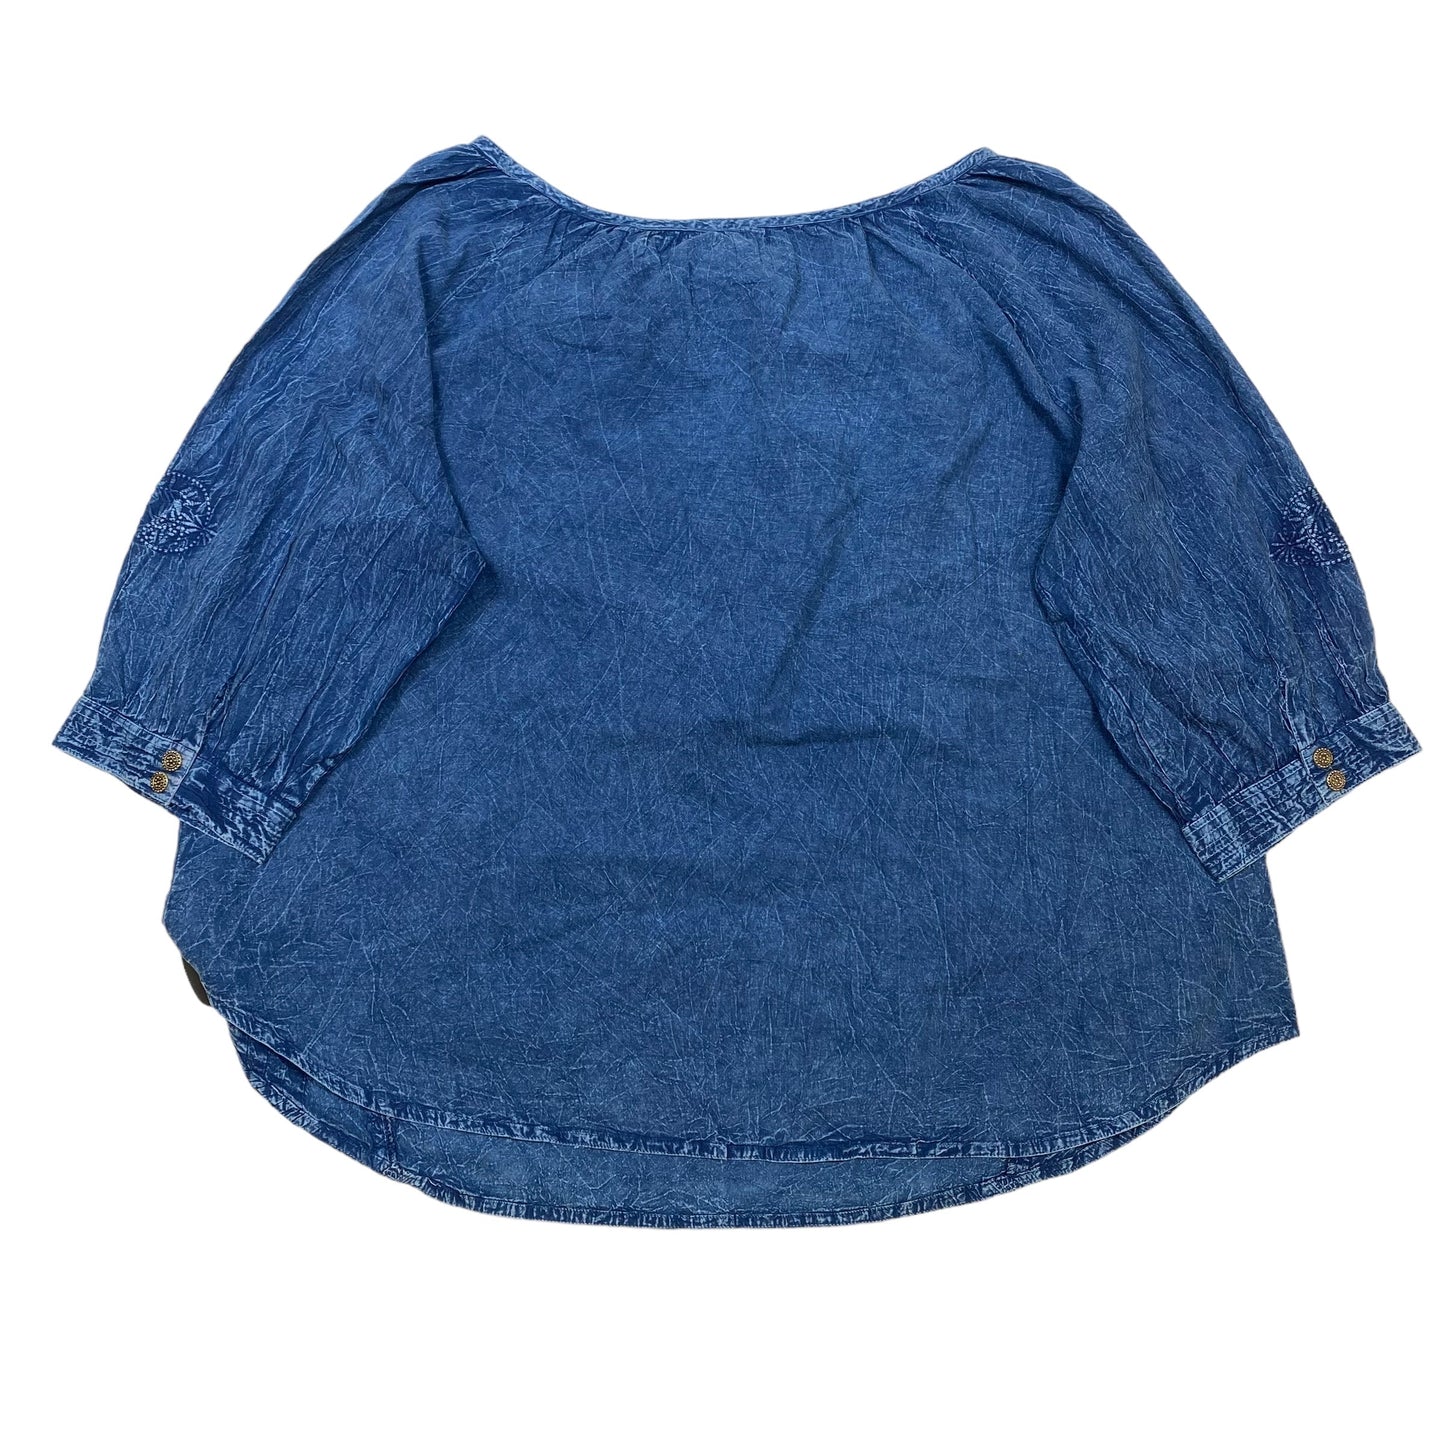 Blue Top 3/4 Sleeve Dressbarn, Size 3x